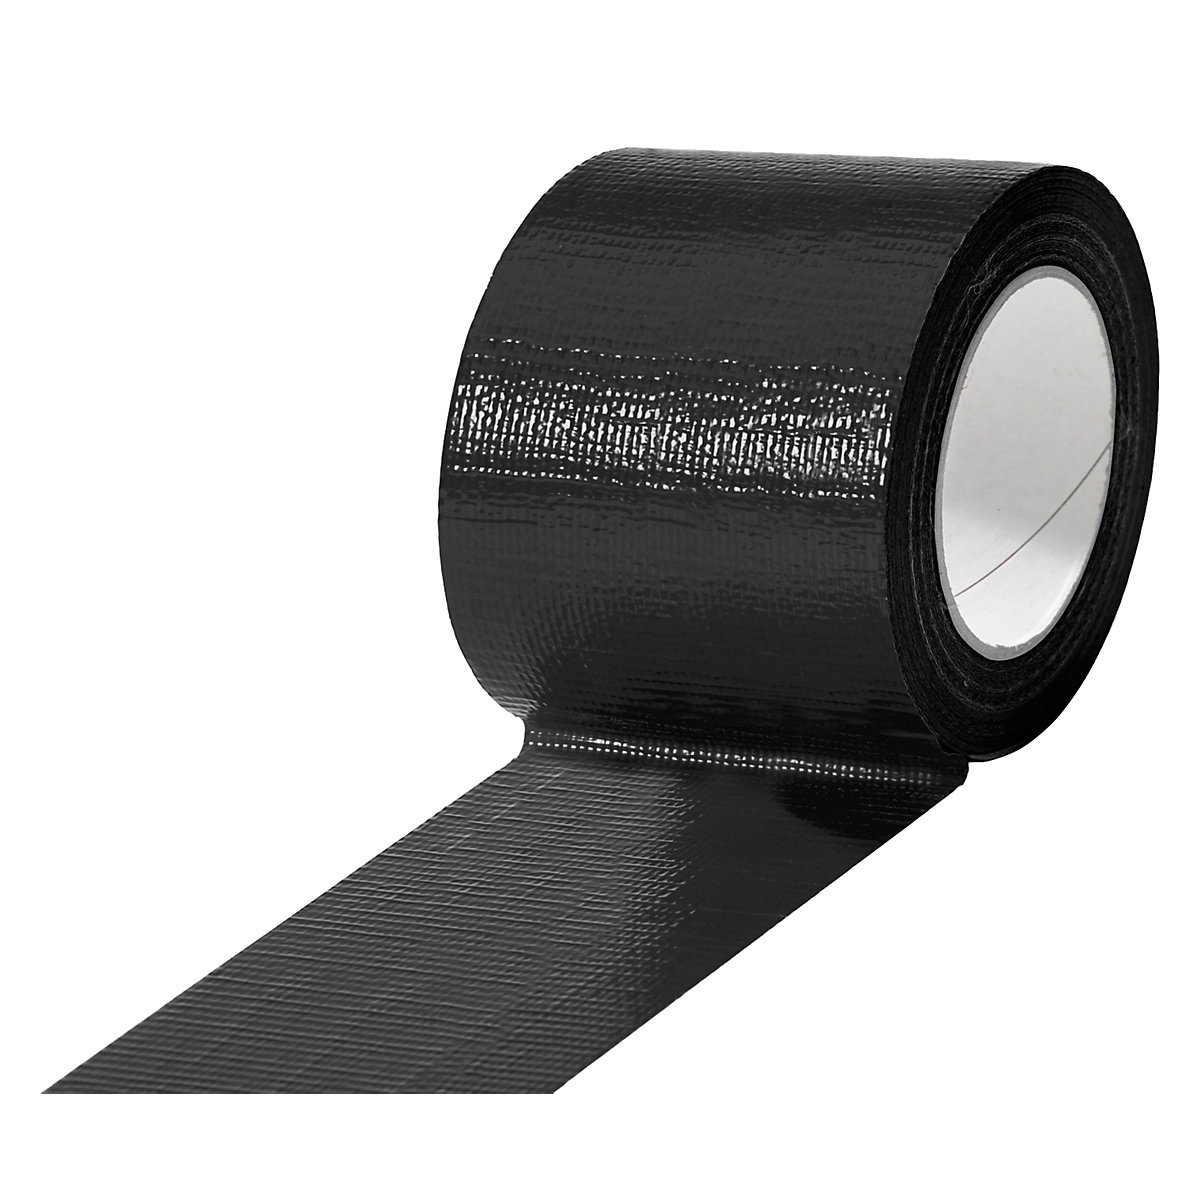 Tkaninová páska, v různých barvách, bal.j. 12 rolí, černá, šířka pásky 75 mm-19